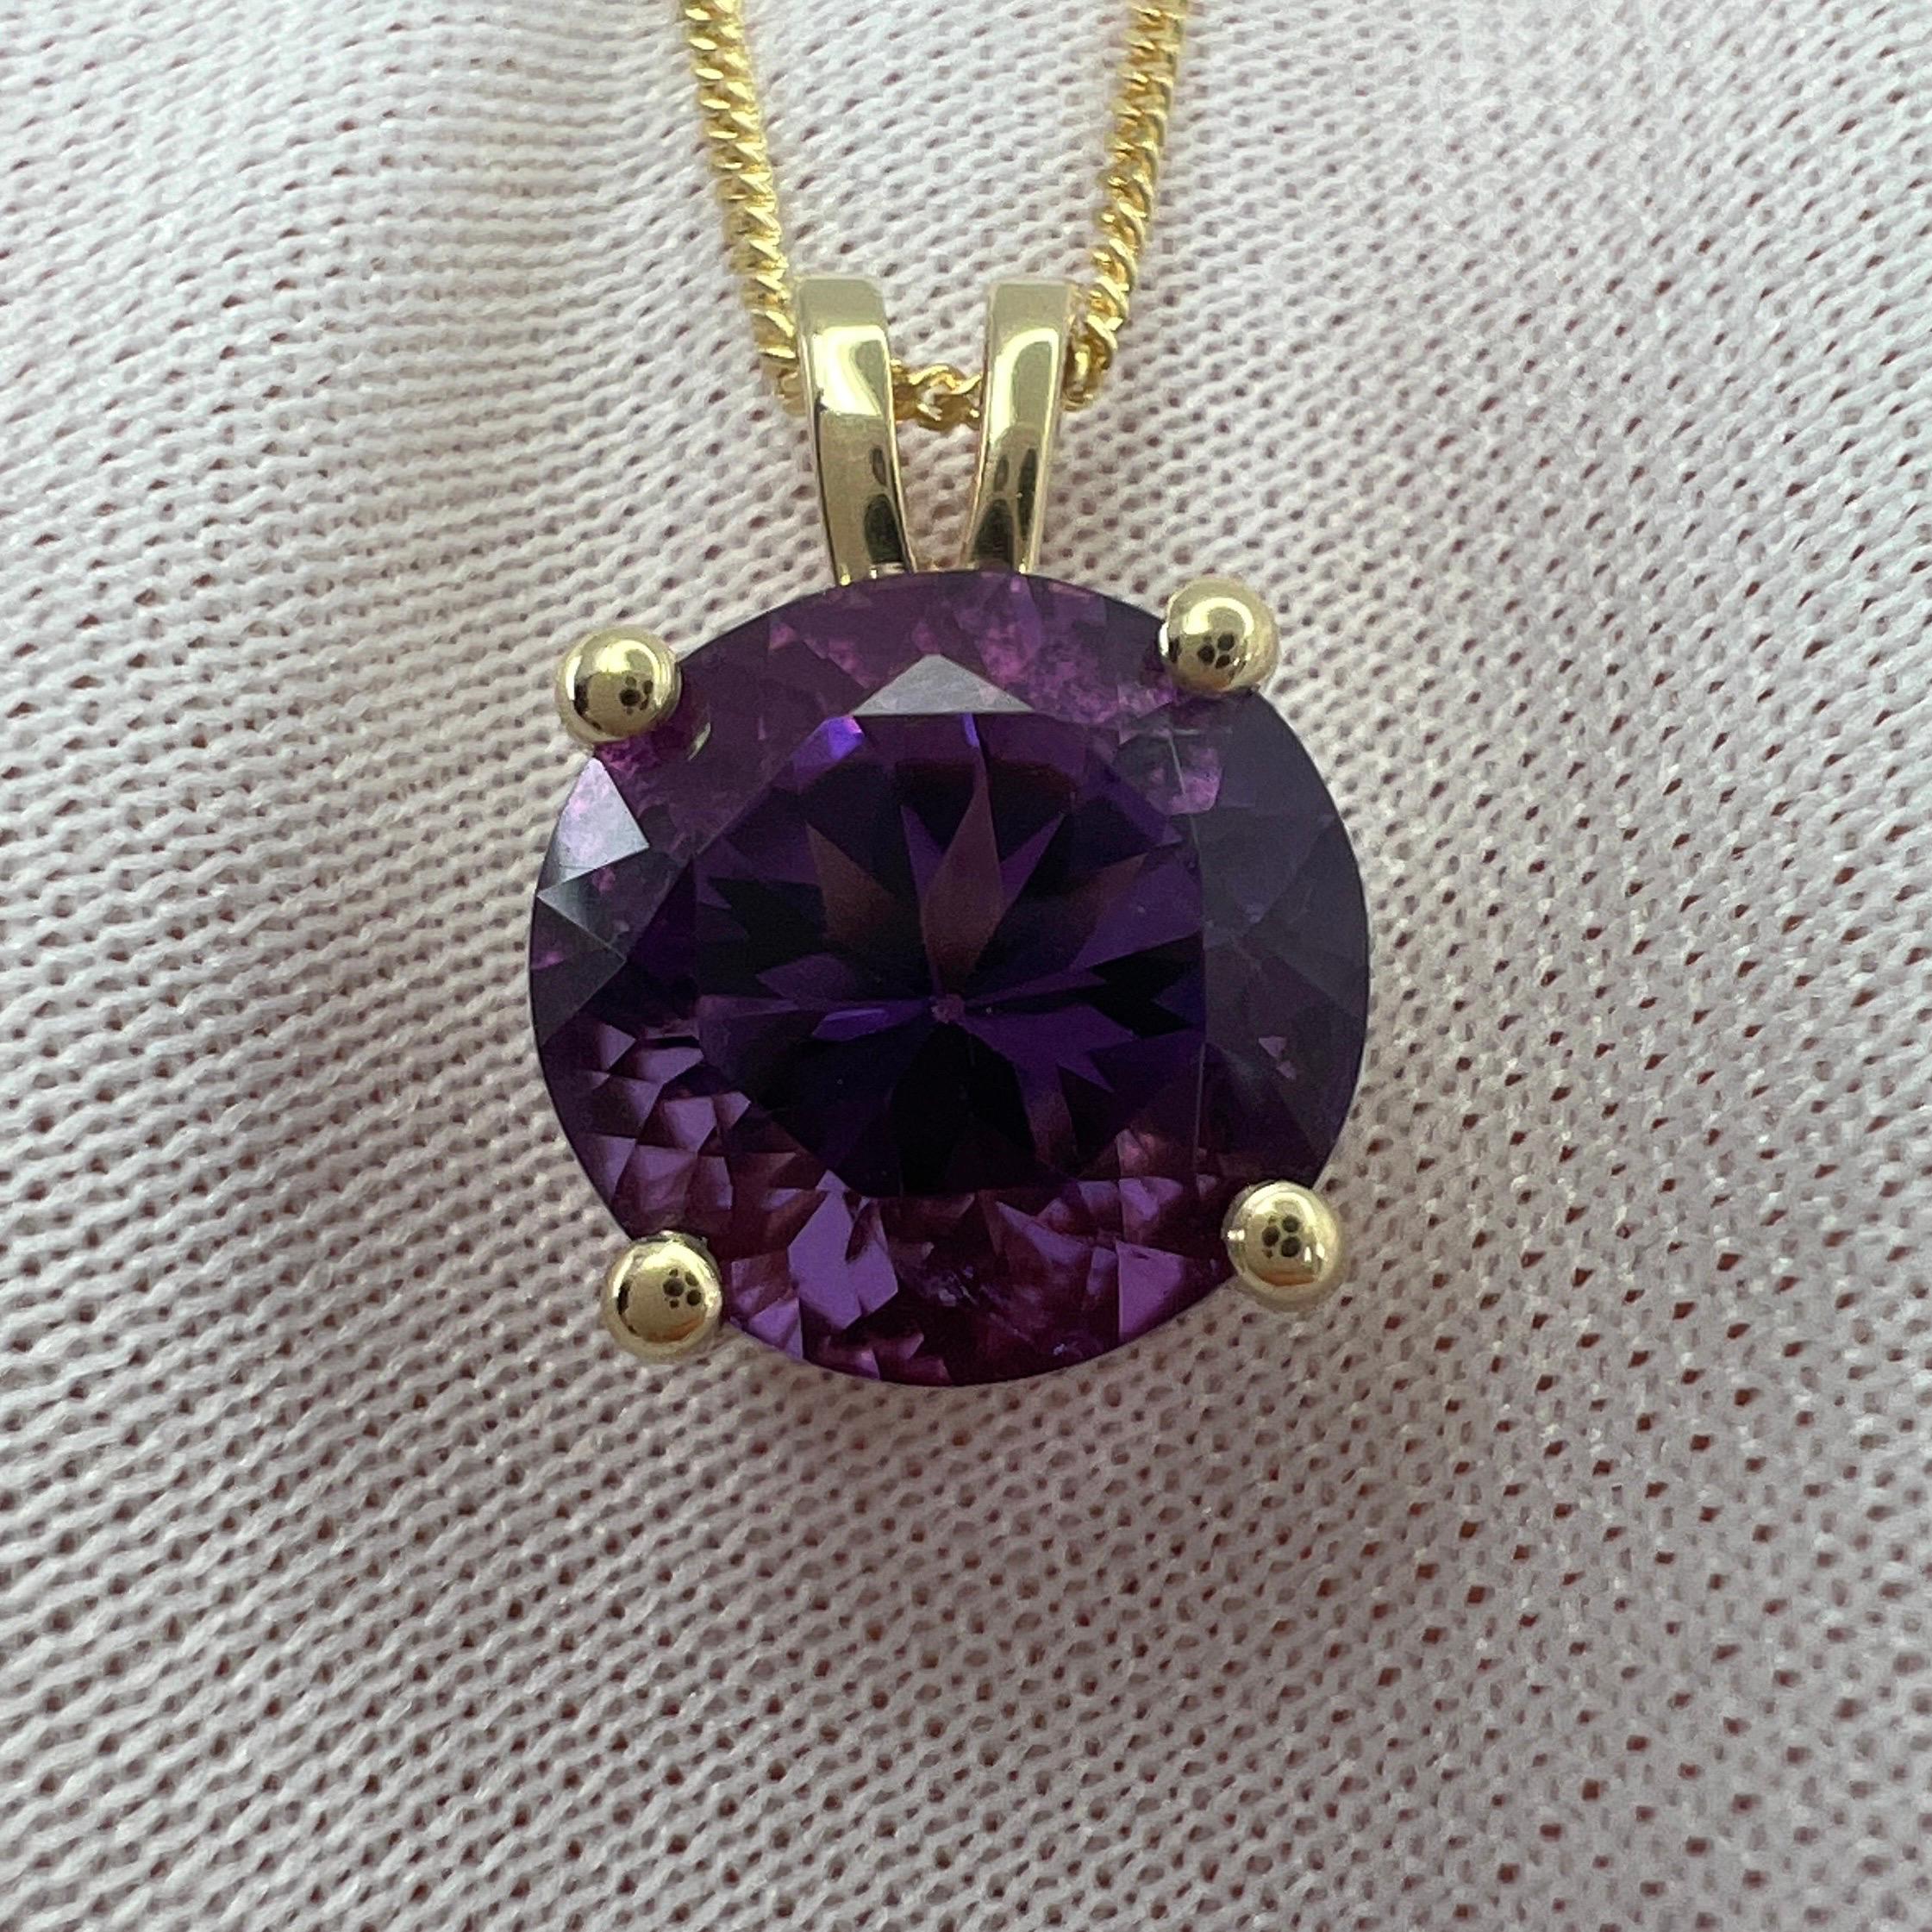 Emerald Cut 3.32 Carat Vivid Purple Amethyst Round Diamond Cut Yellow Gold Pendant Necklace For Sale